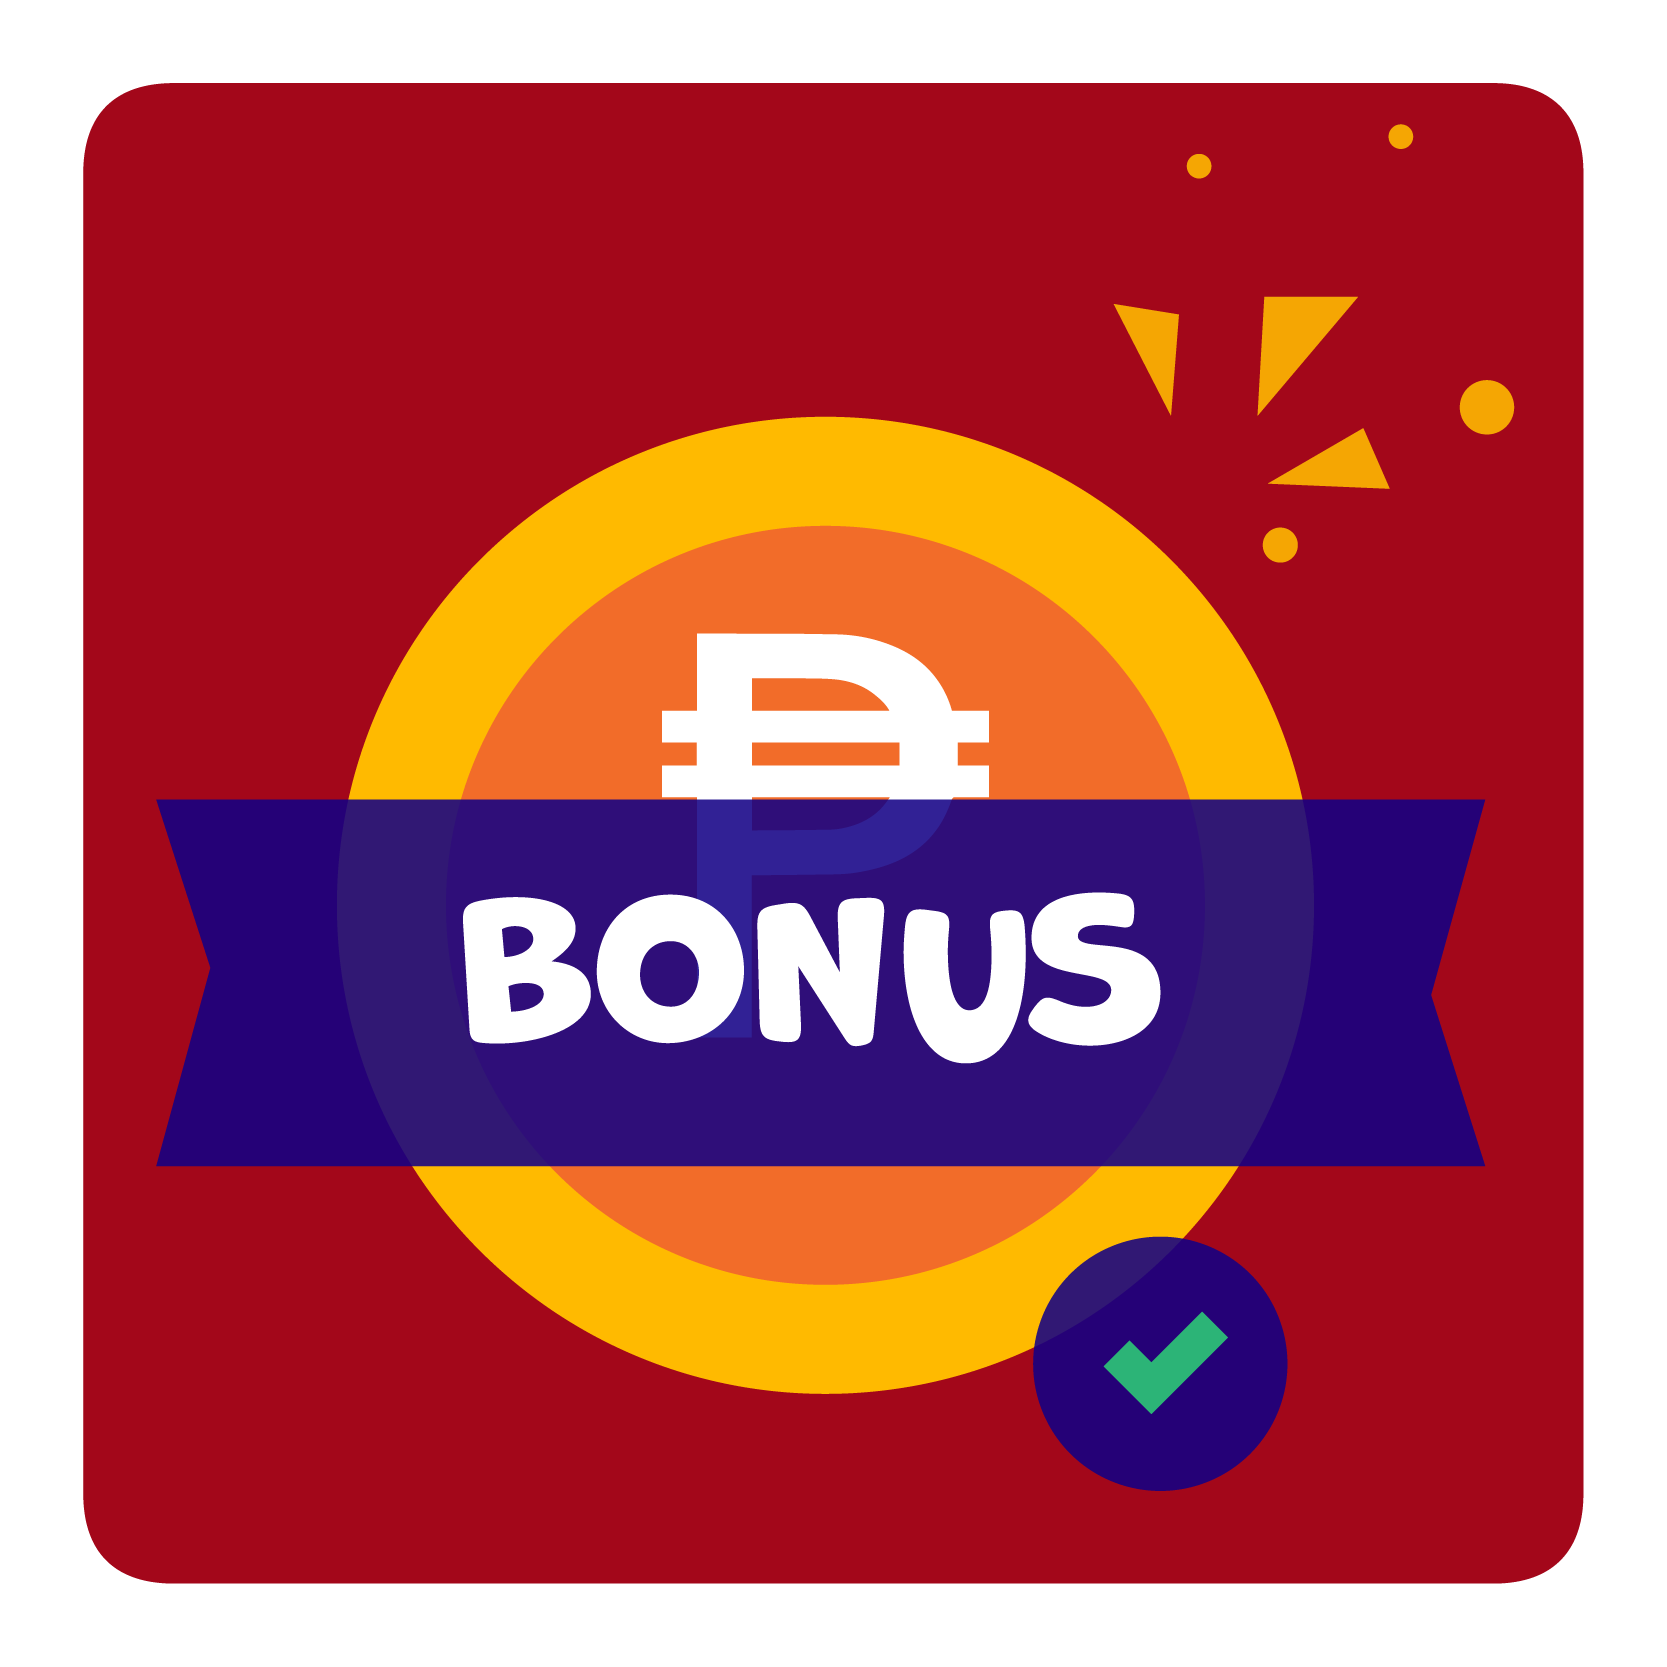 Play with bonus